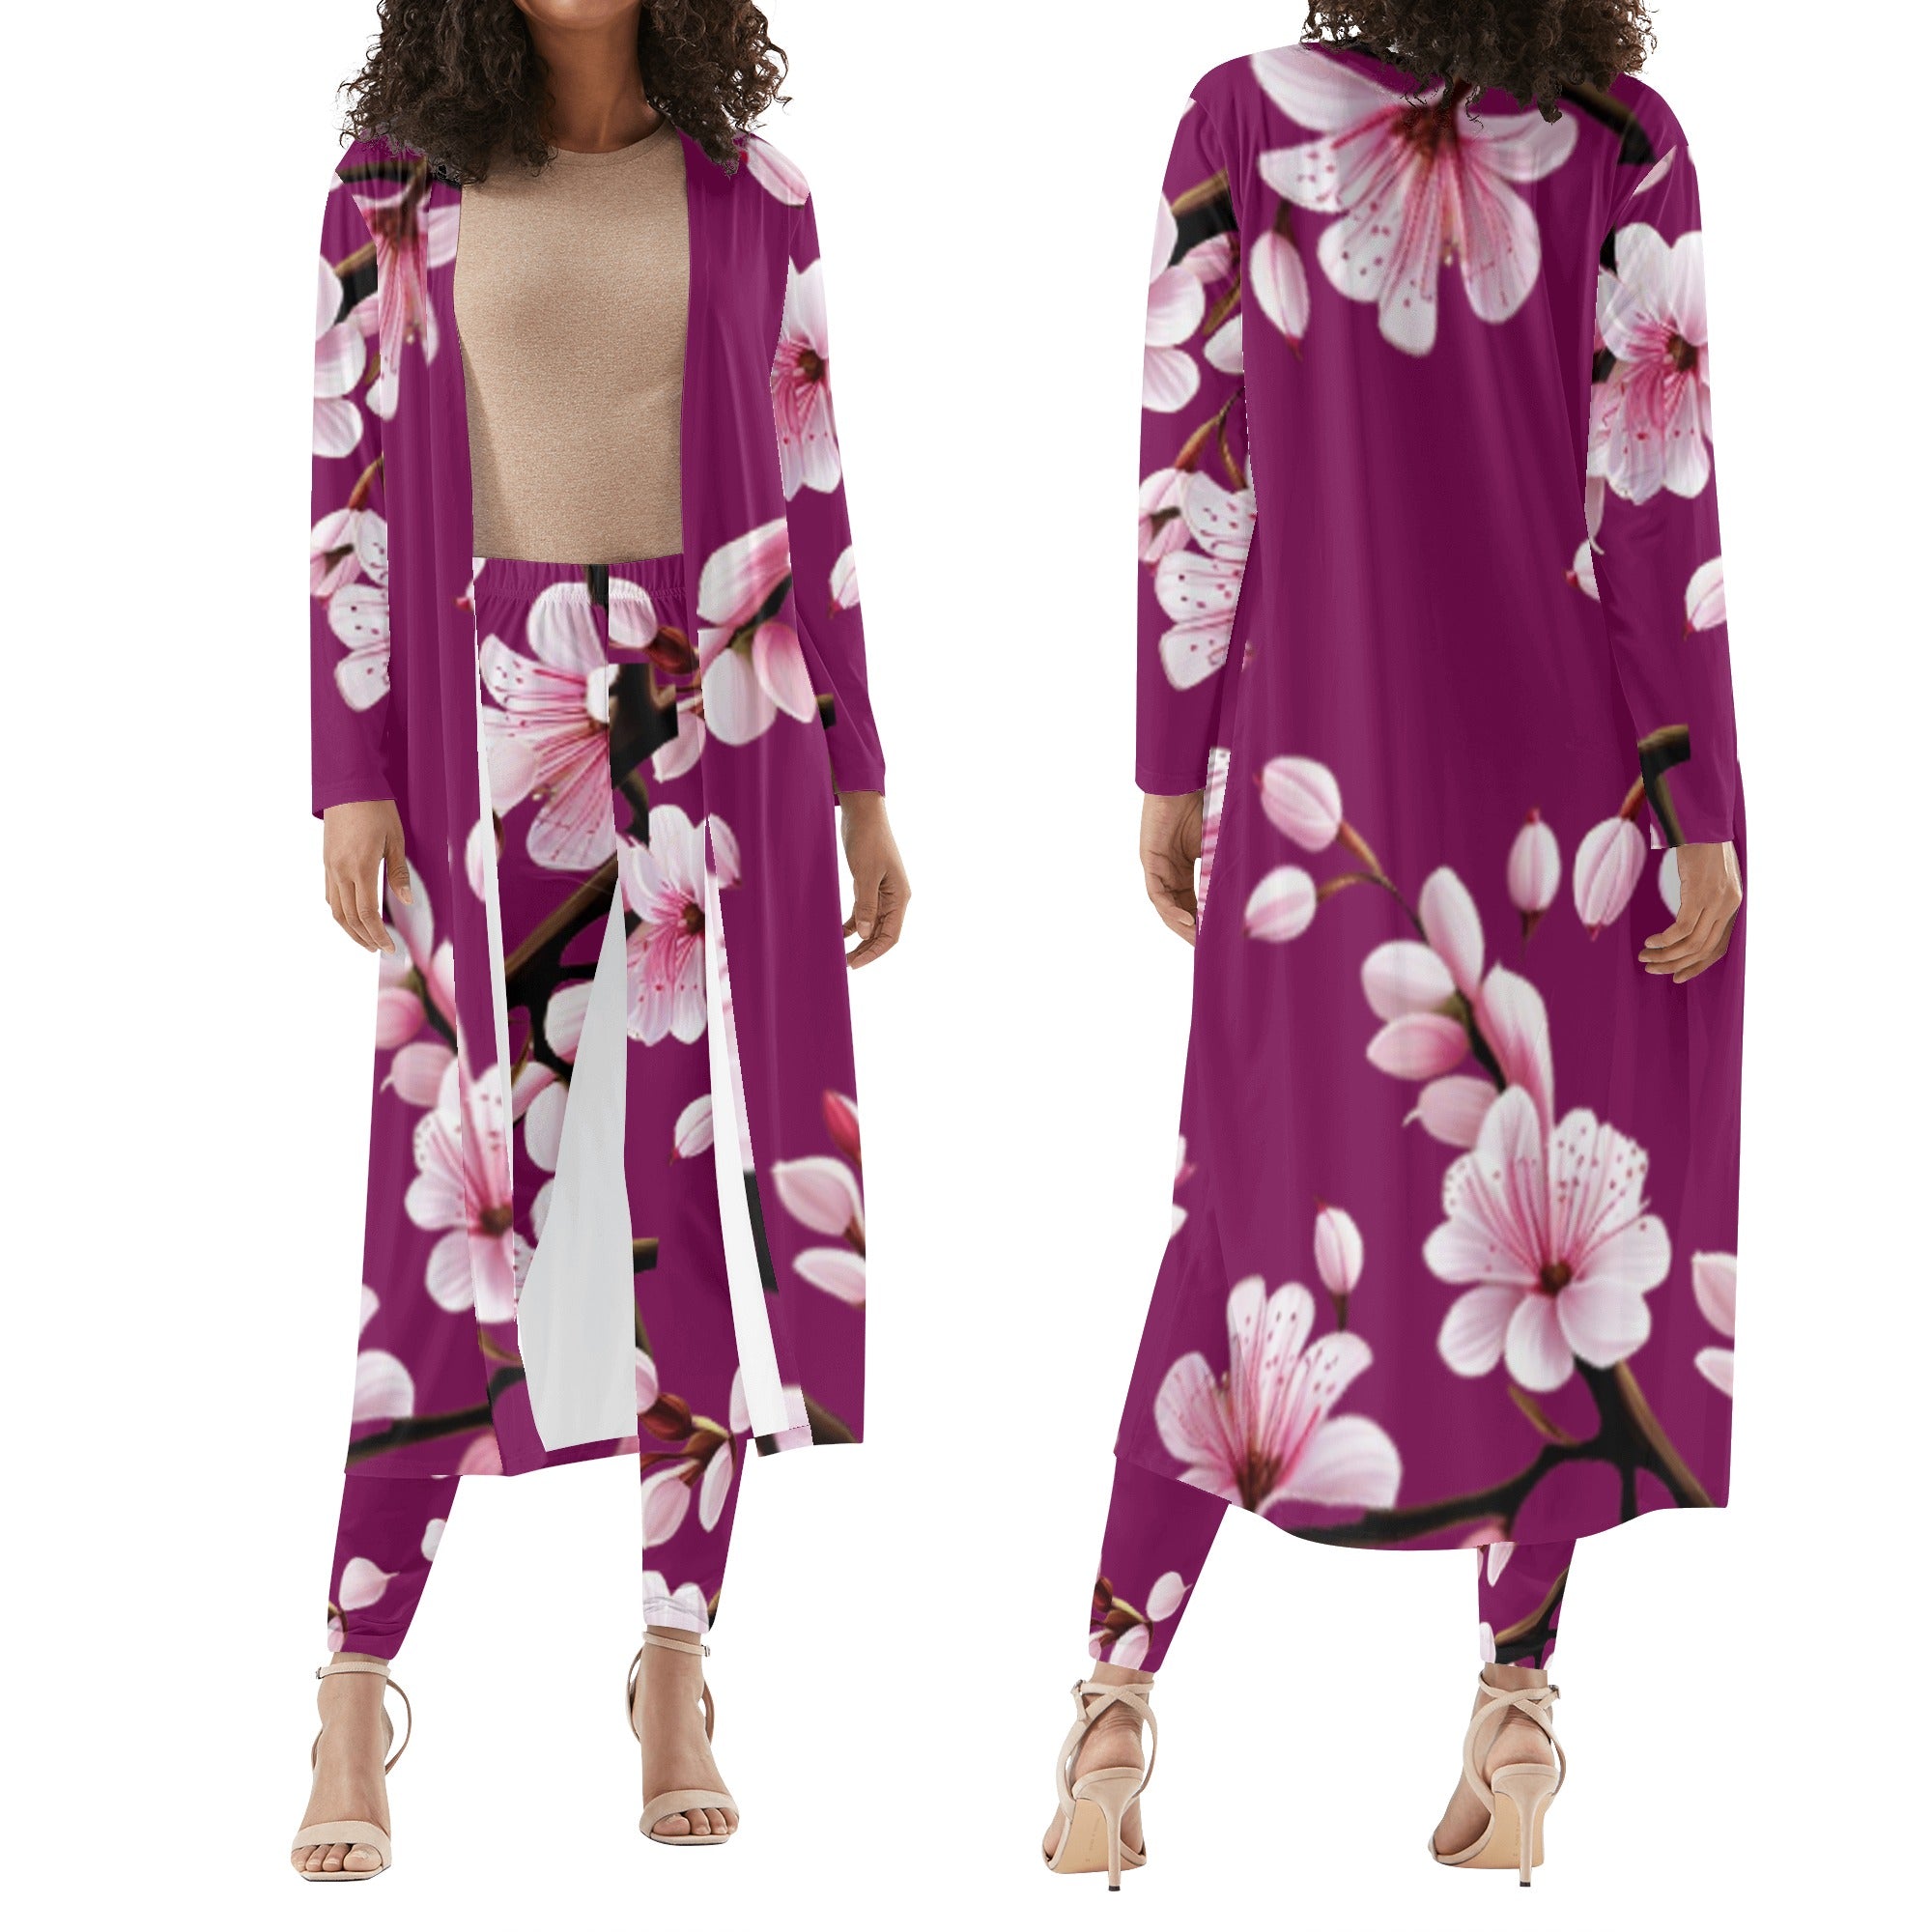 2 - Plum - Cherry Blossom Womens Long Sleeve Cardigan and Leggings 2pcs - 4 colors - womens pants set at TFC&H Co.